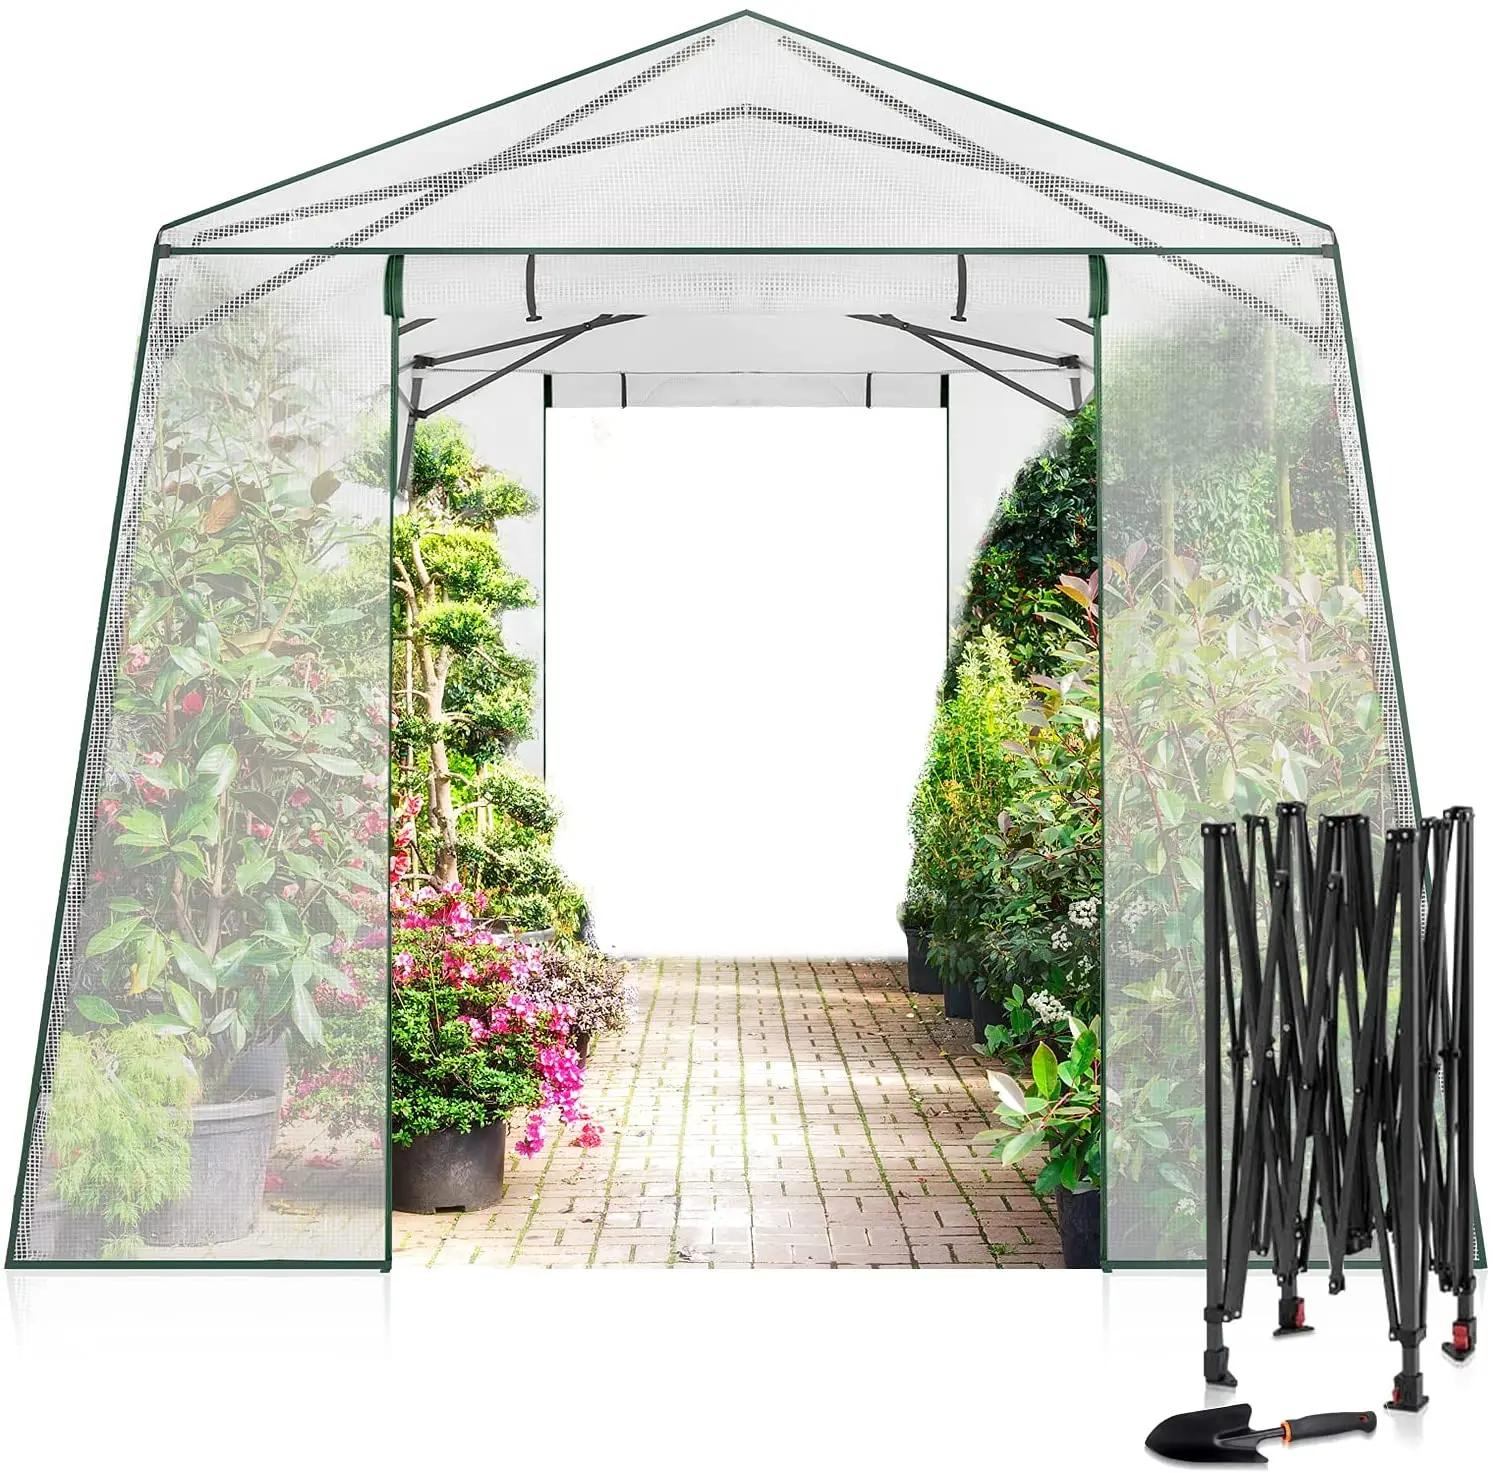 

Skyplant Pop-up Outdoor Walk-in Greenhouse plastic garden mini greenhouse, White/green